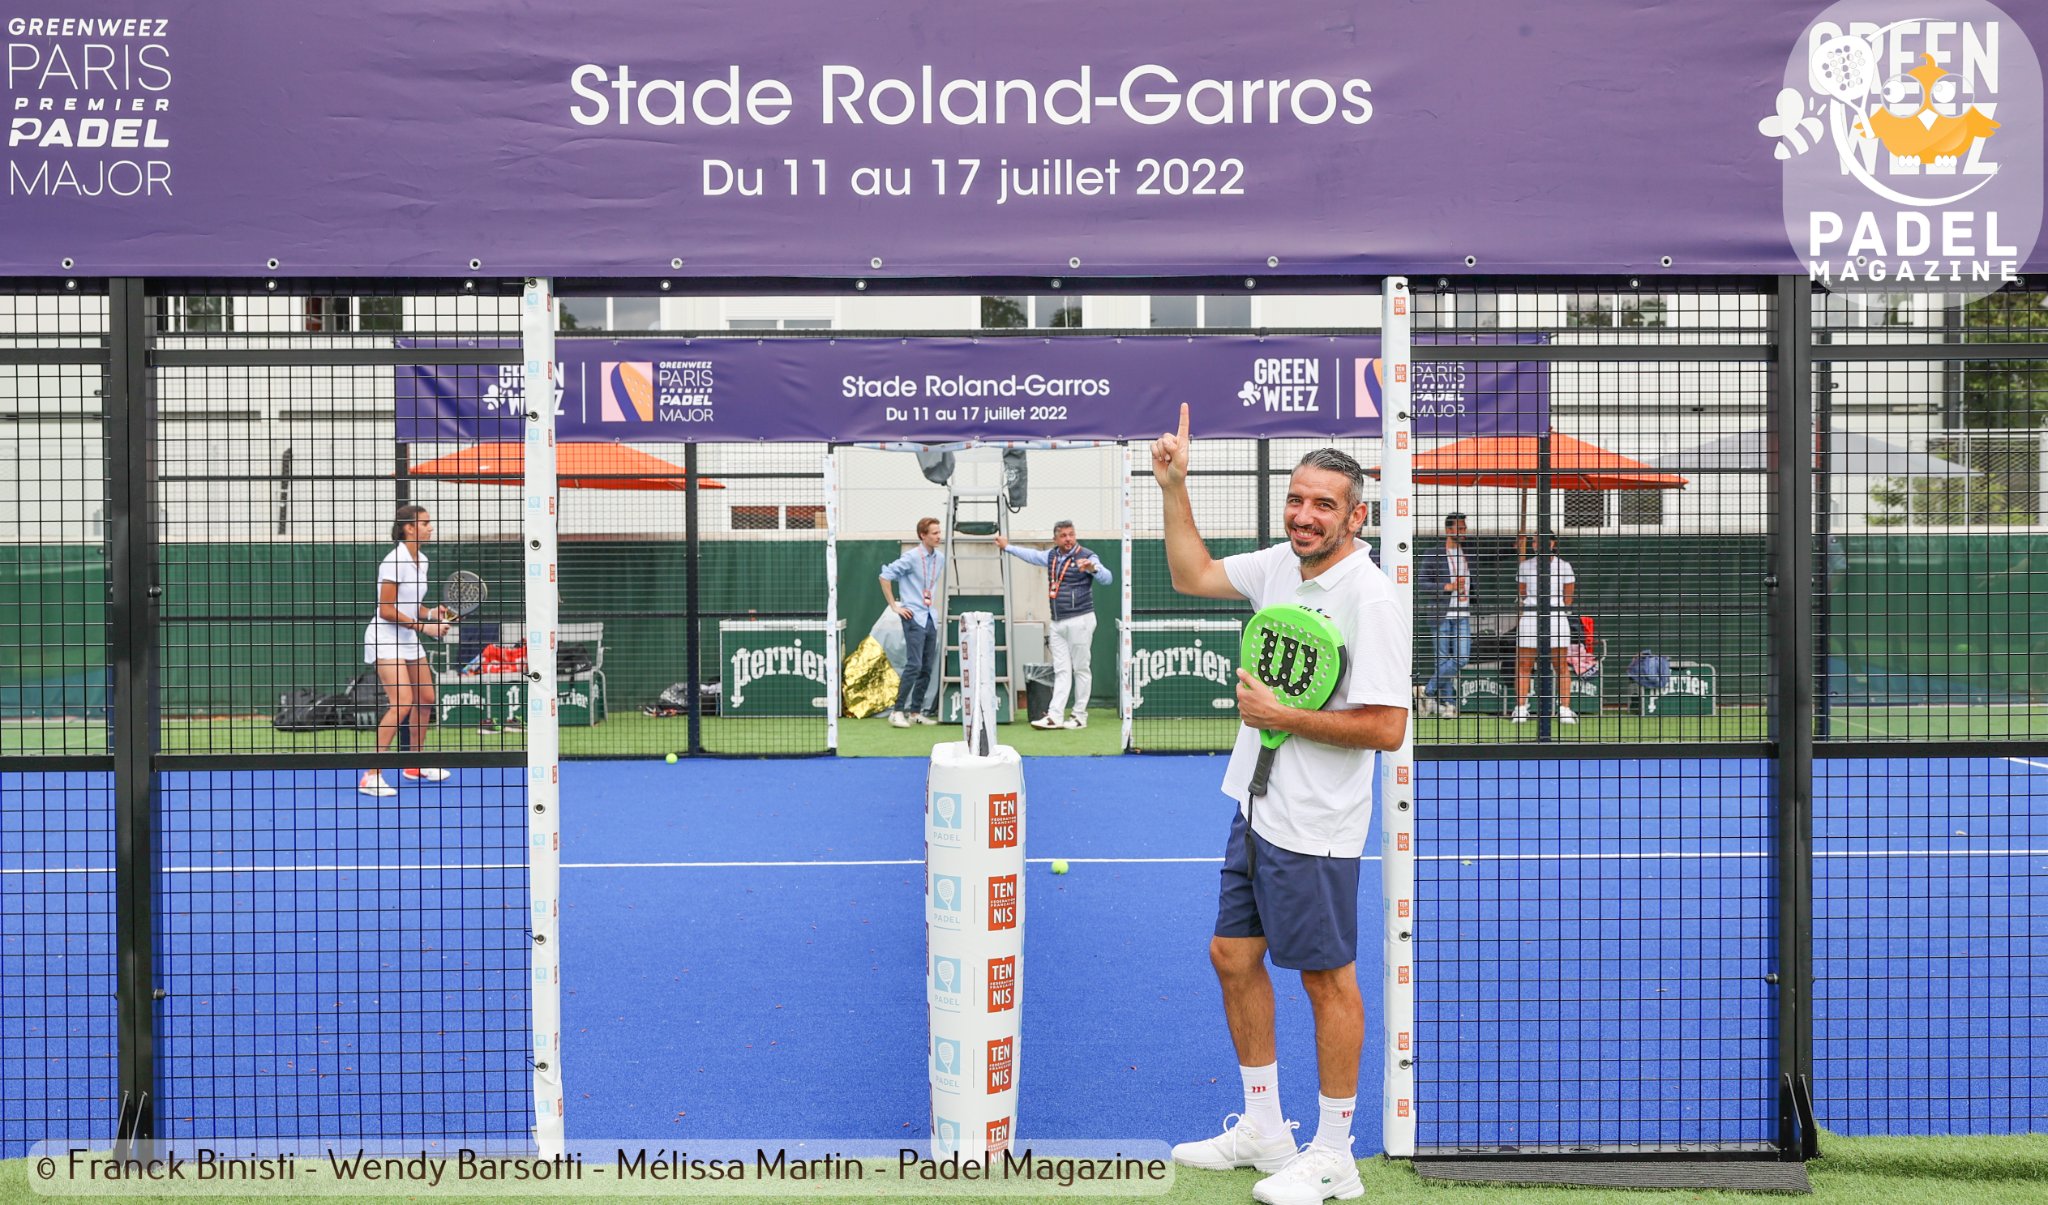 Roland Garros stadion greenweez paris premier padel major